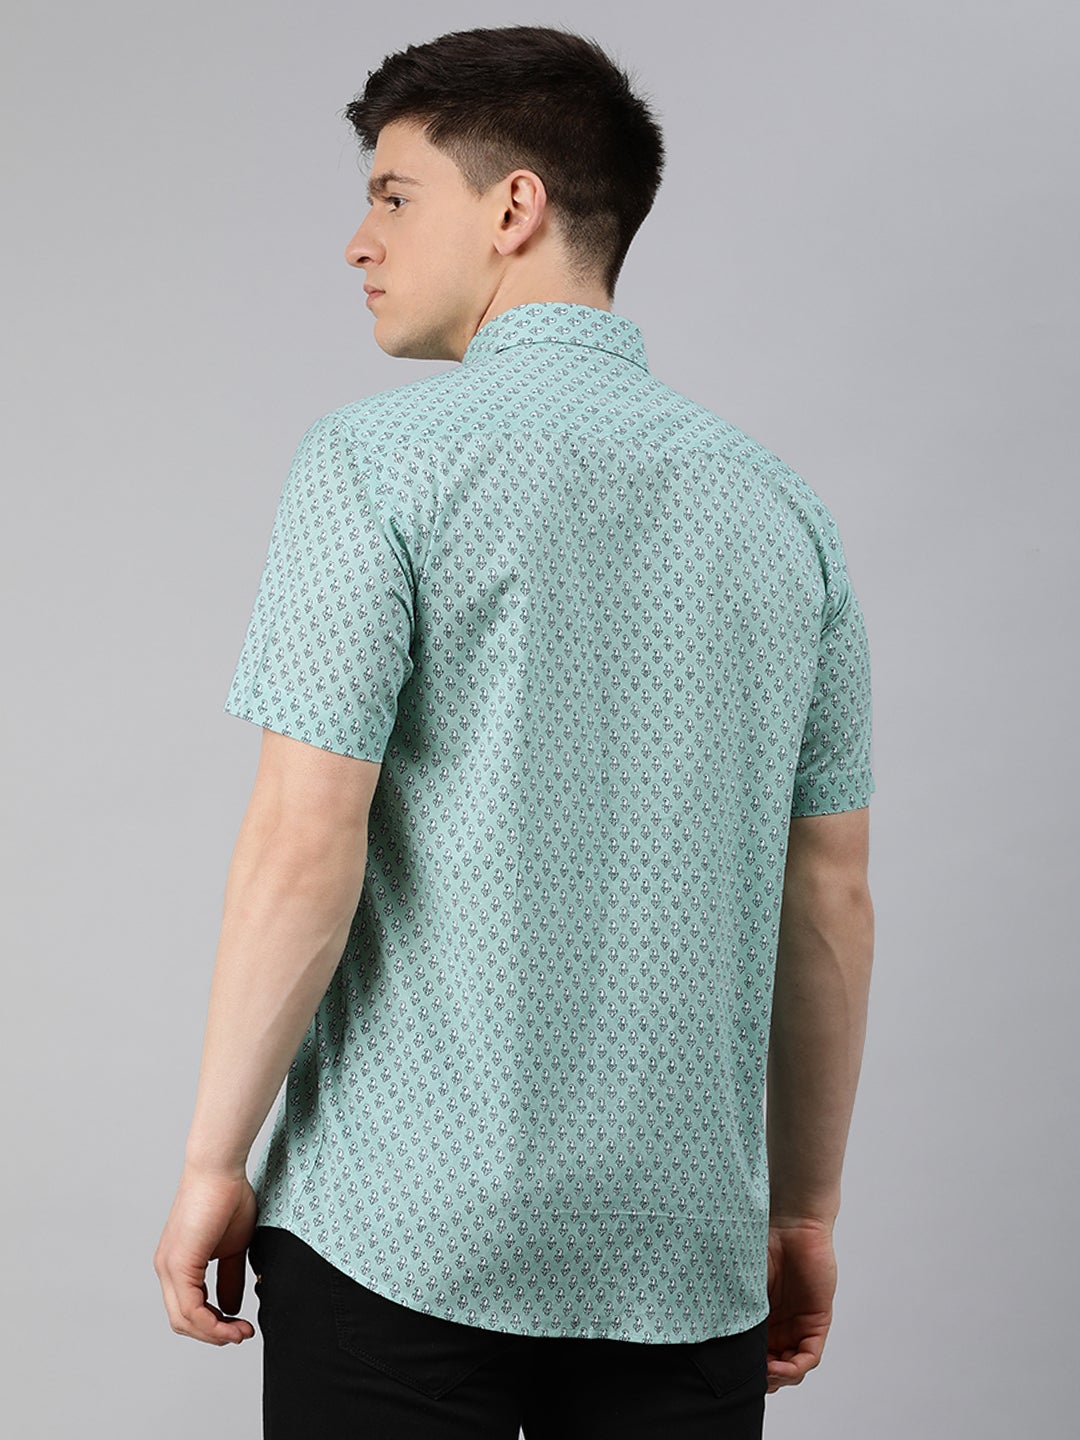 Sea Green Cotton Short Sleeves Shirts For Men-MMH026 - NOZ2TOZ